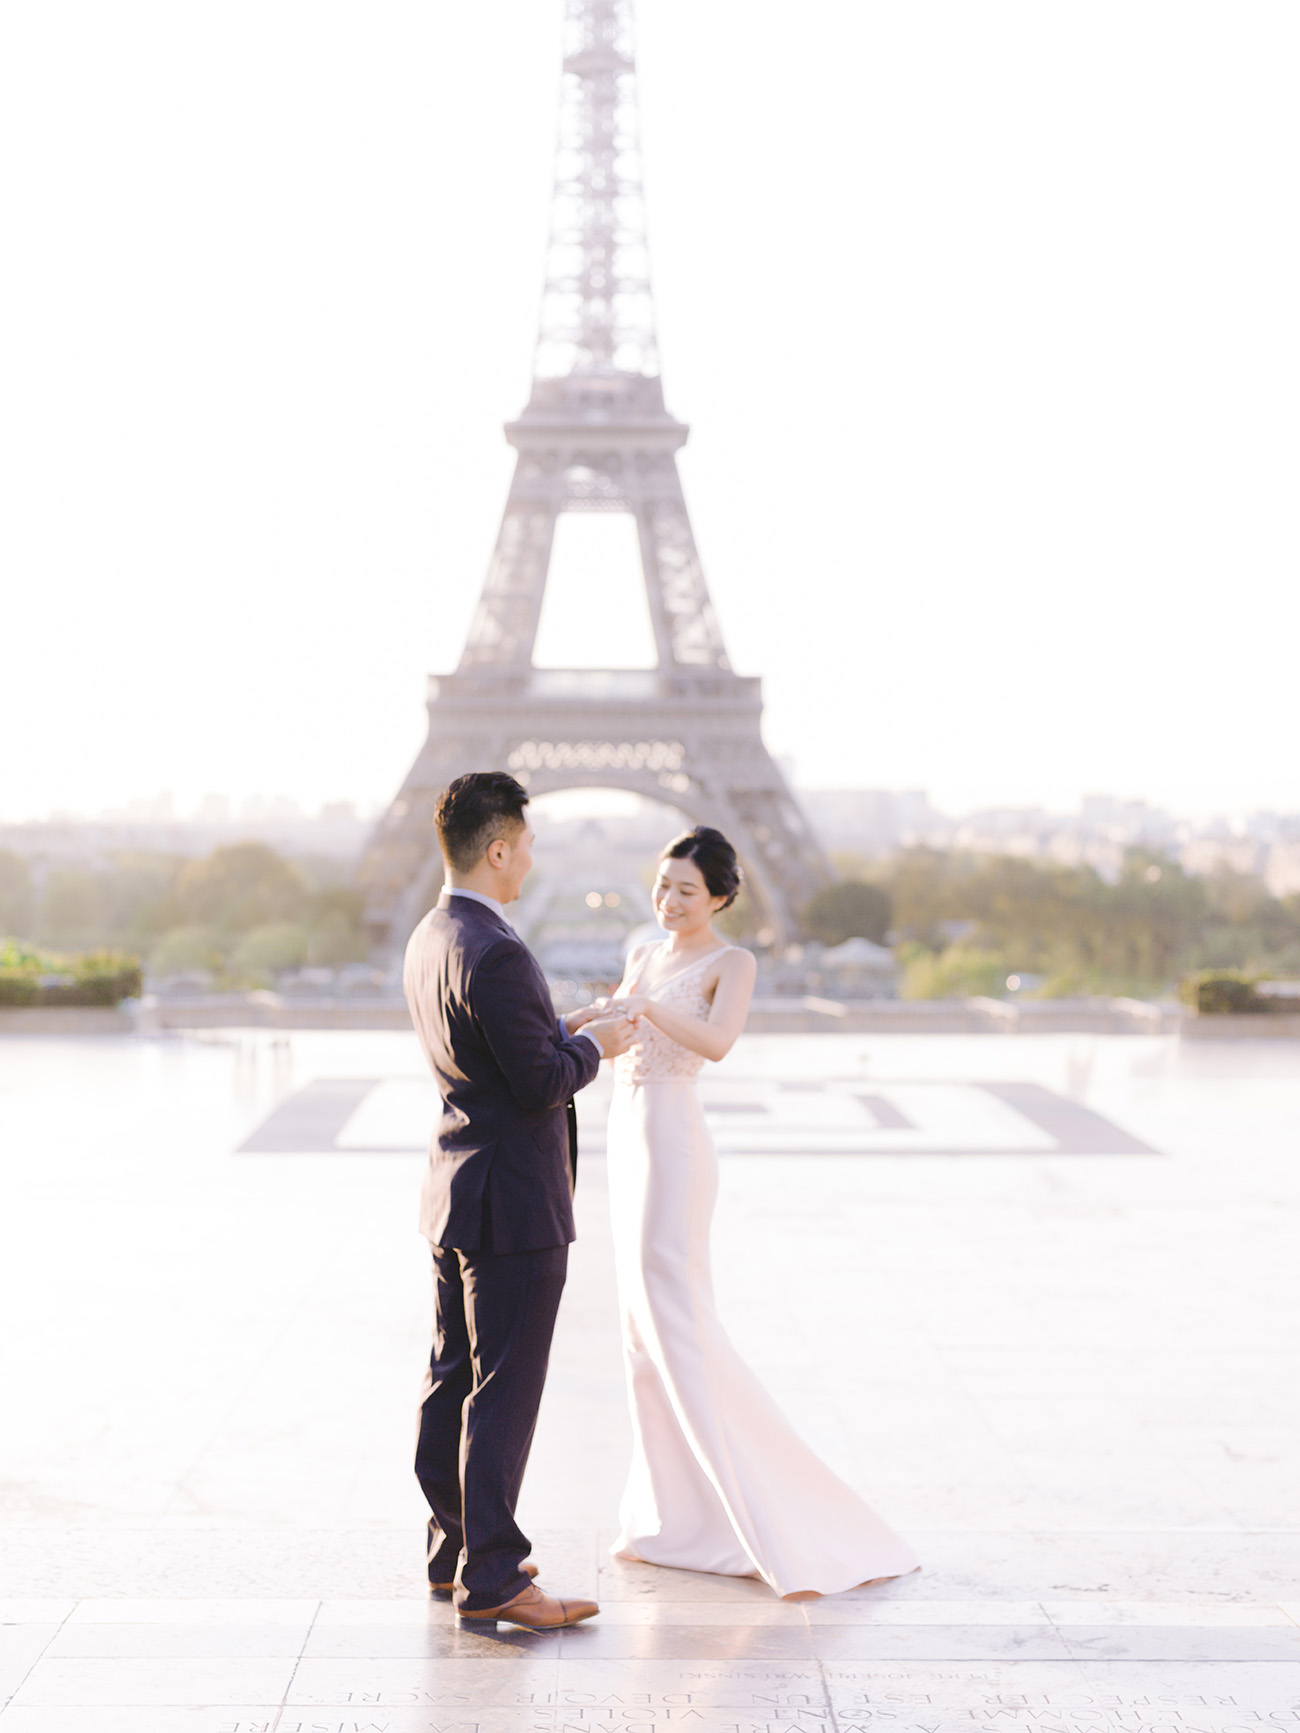 Man putting veil on woman at Eiffel Tower in Paris